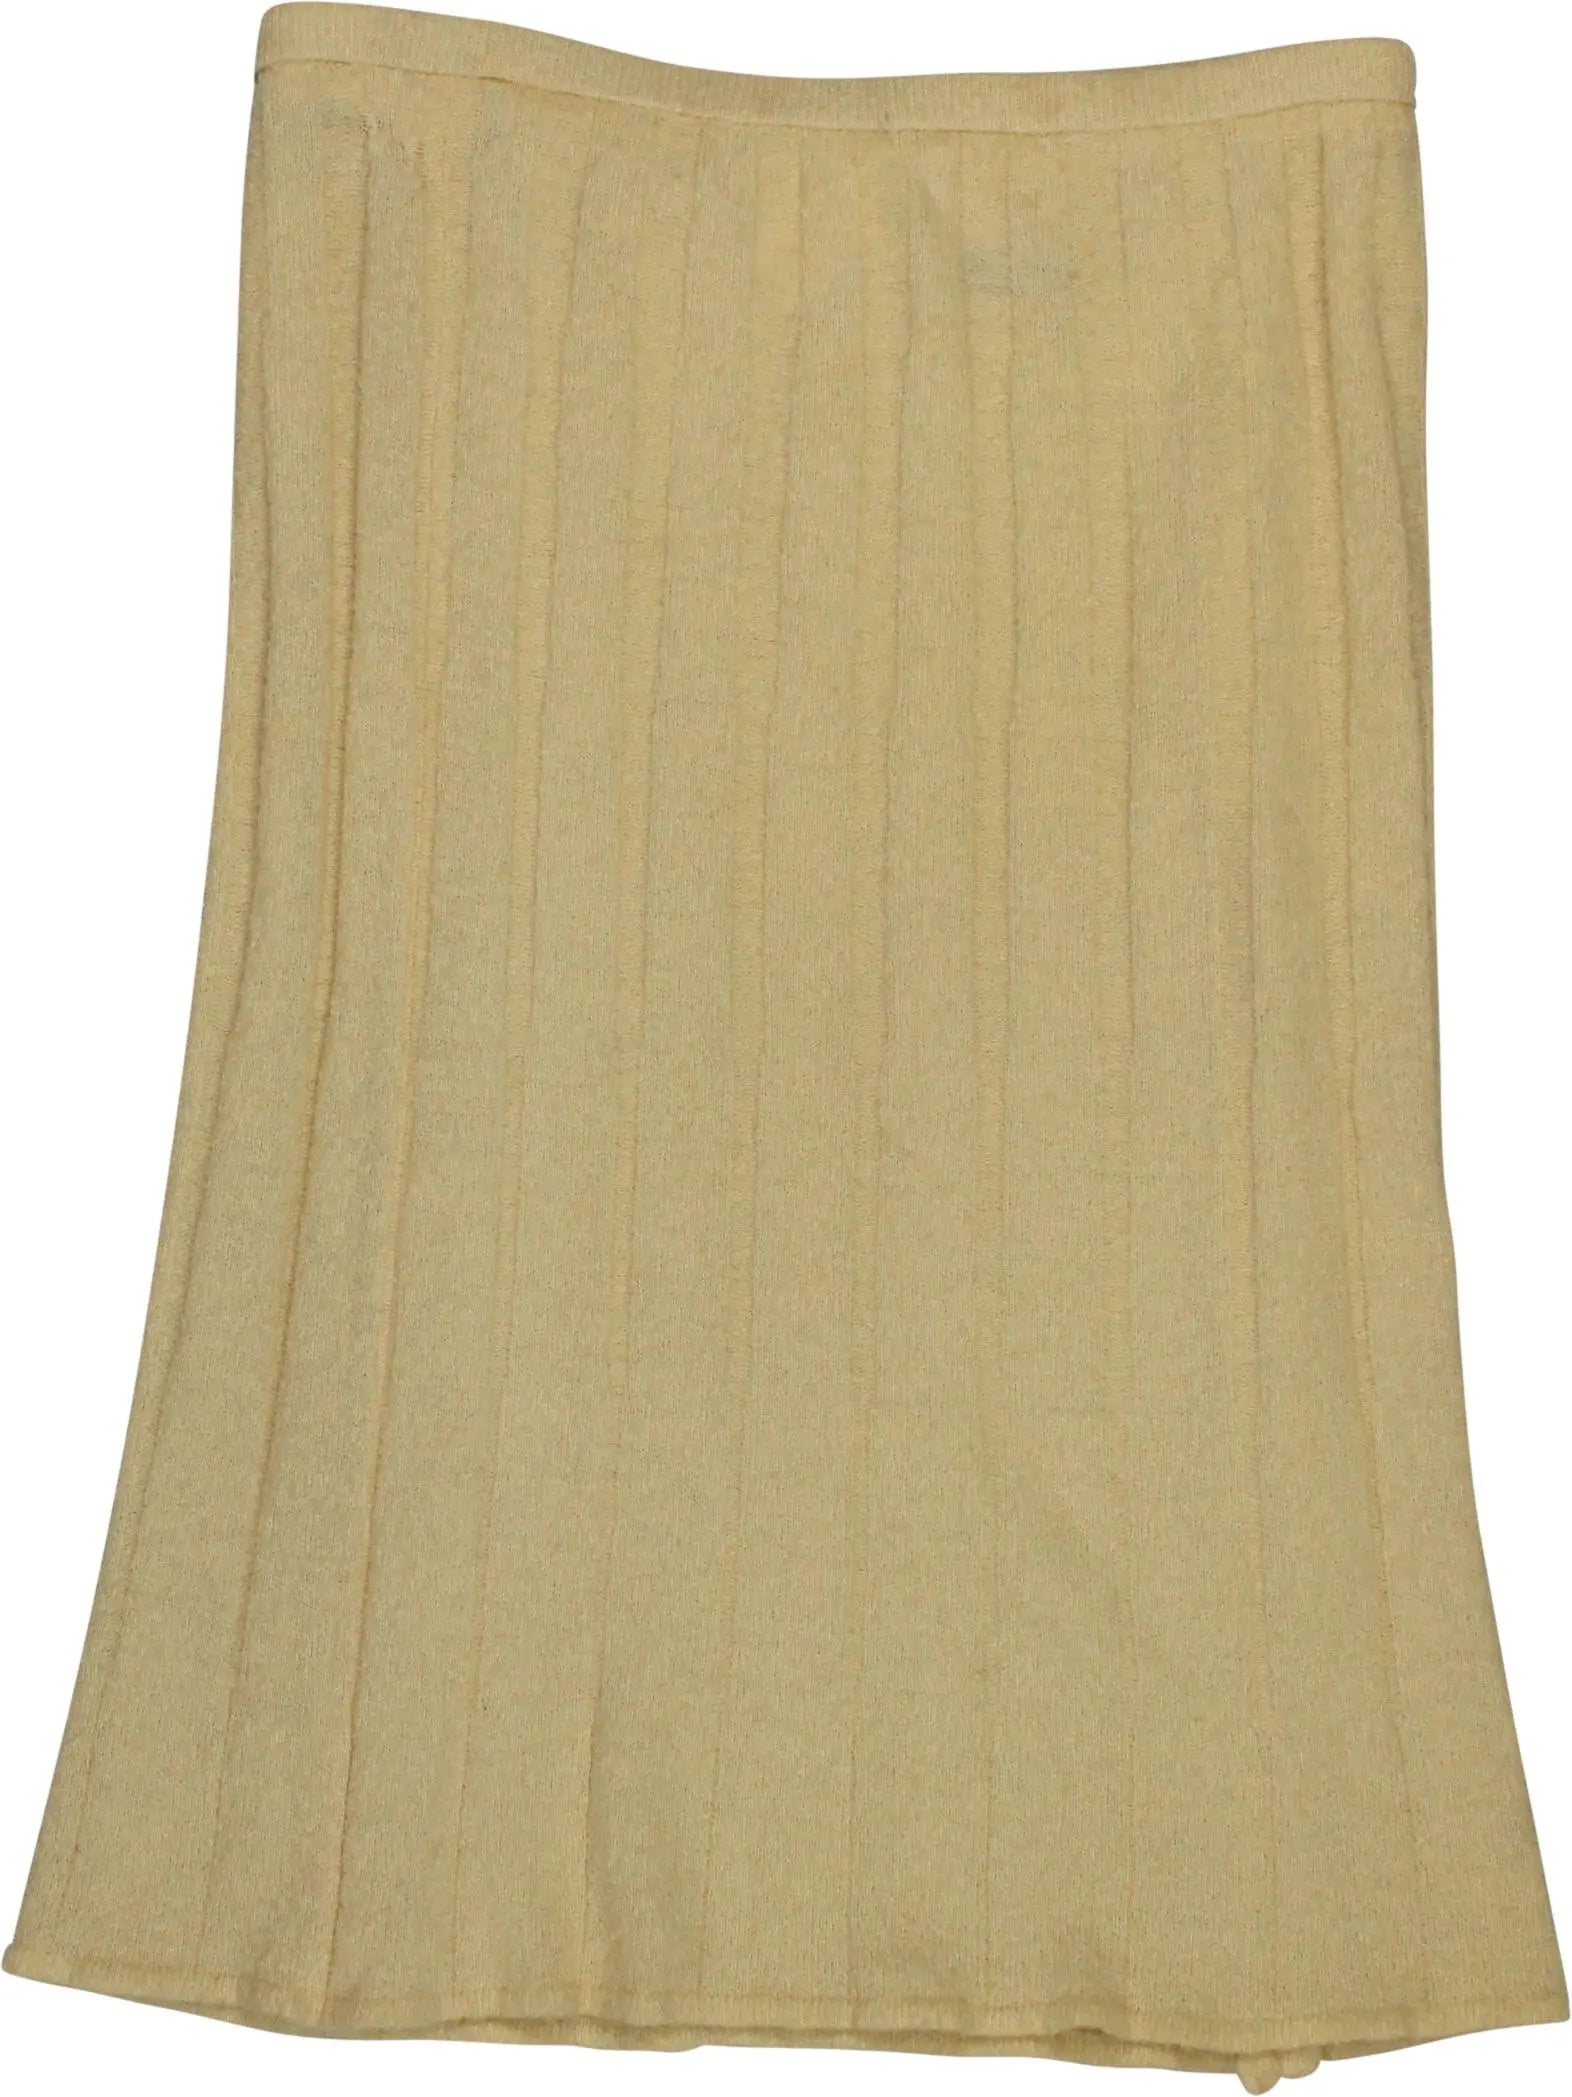 Blevle - Skirt- ThriftTale.com - Vintage and second handclothing